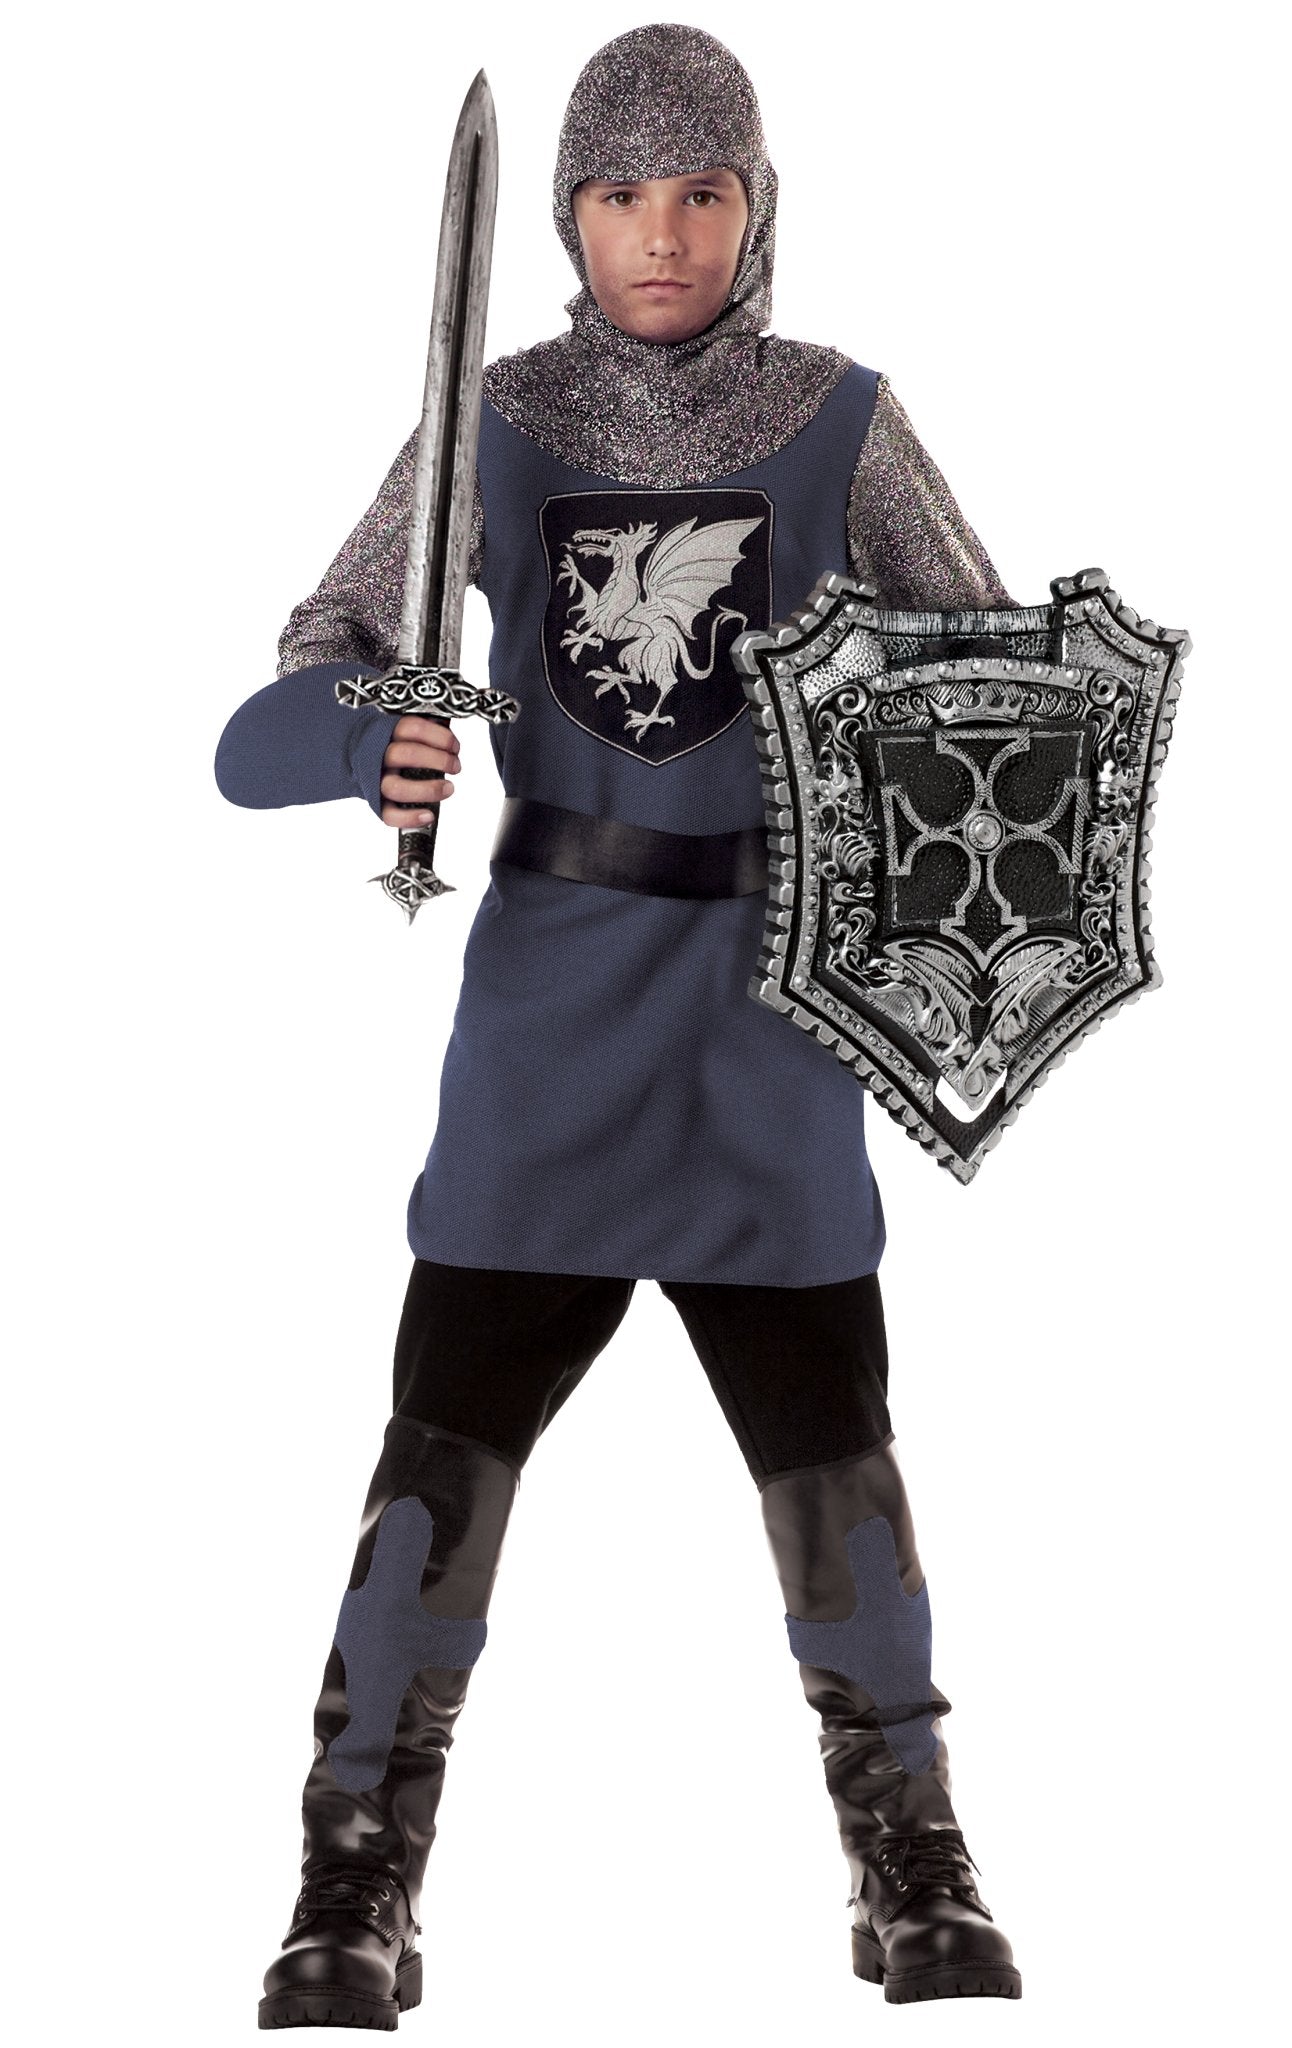 Valiant Knight - Simply Fancy Dress